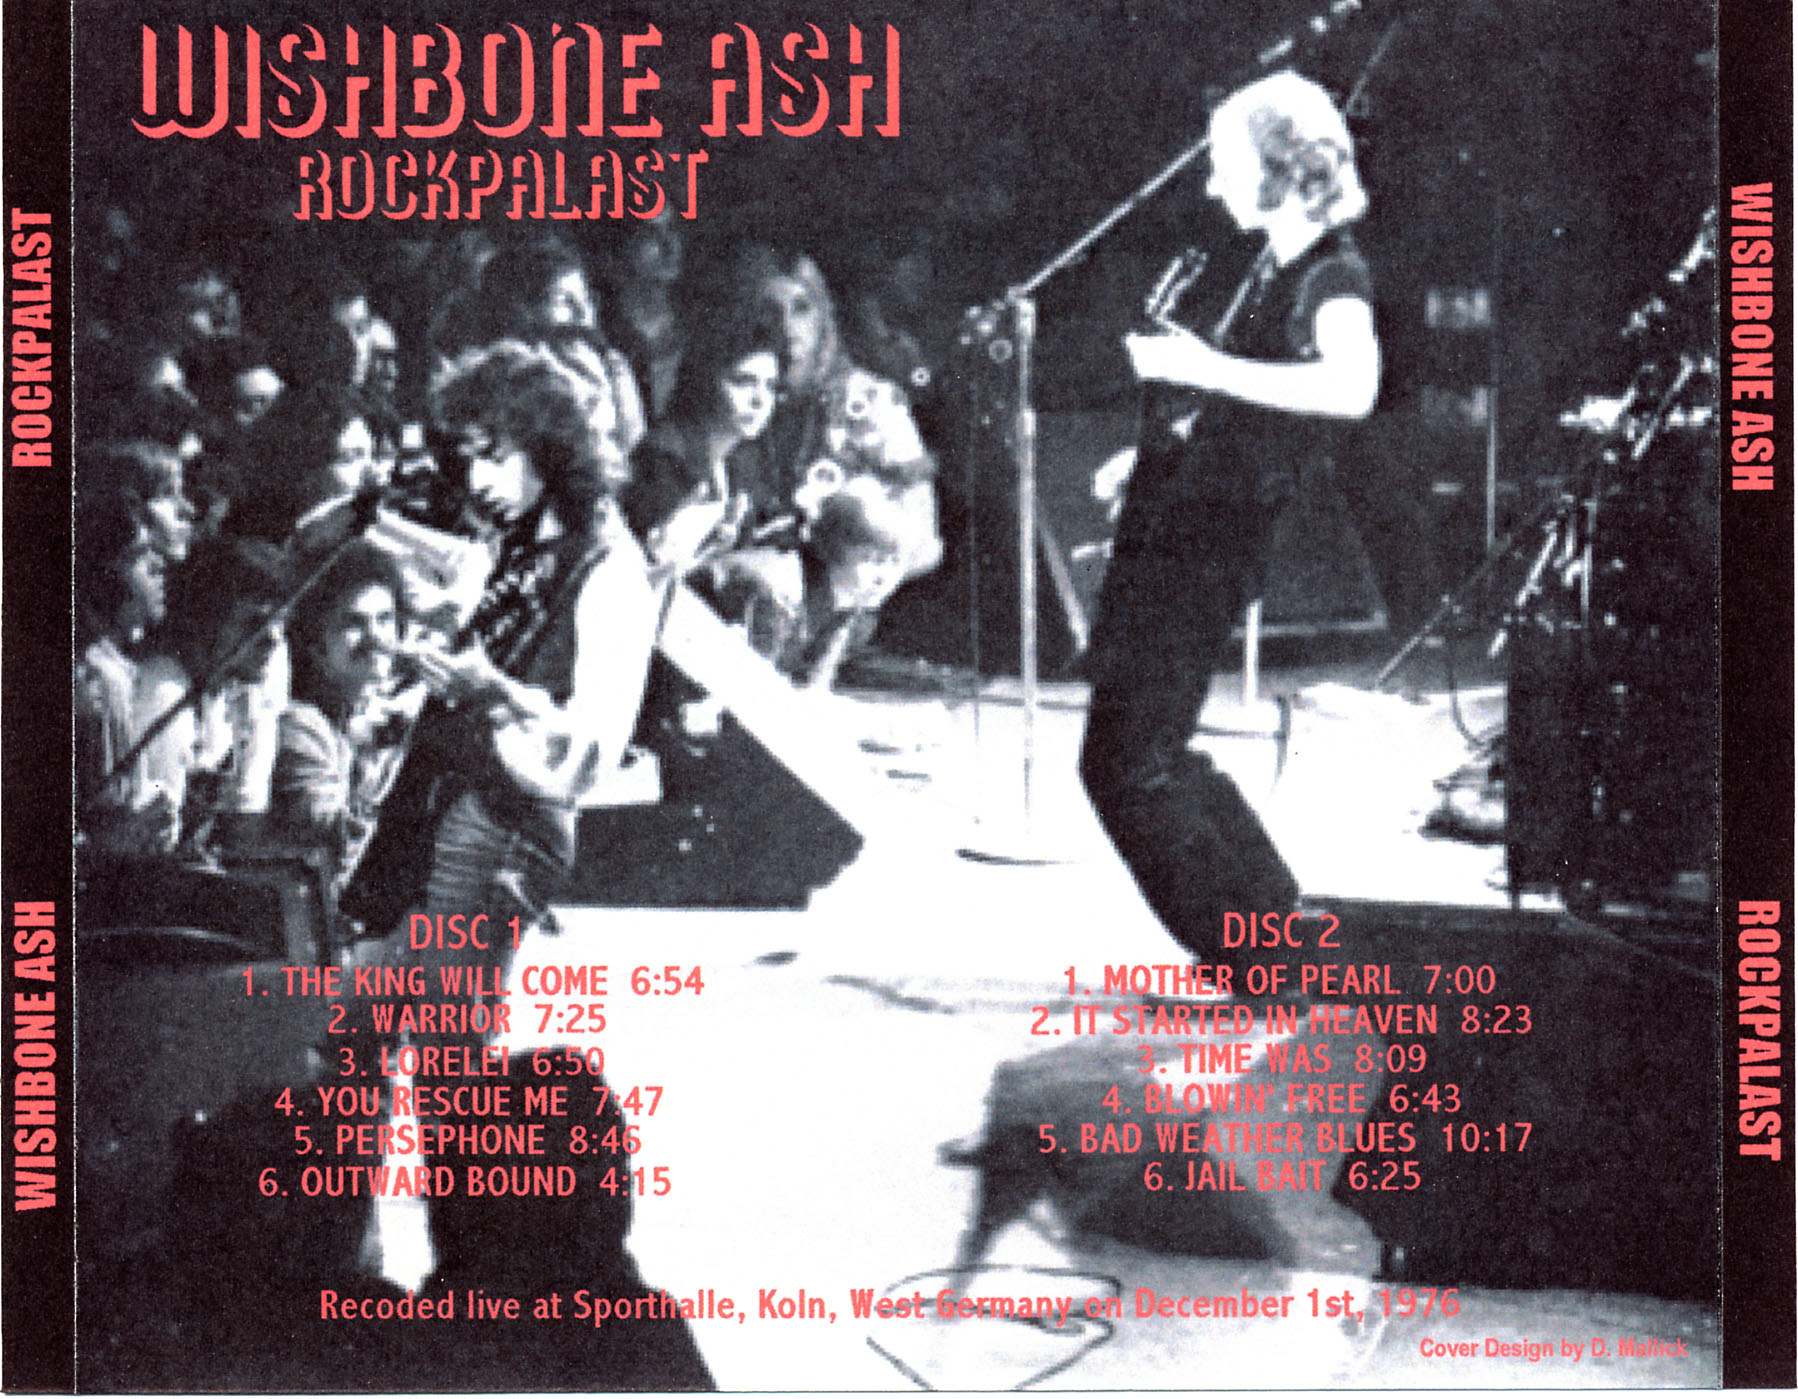 WishboneAsh1976-12-01RockpalastKolnGermany.jpg